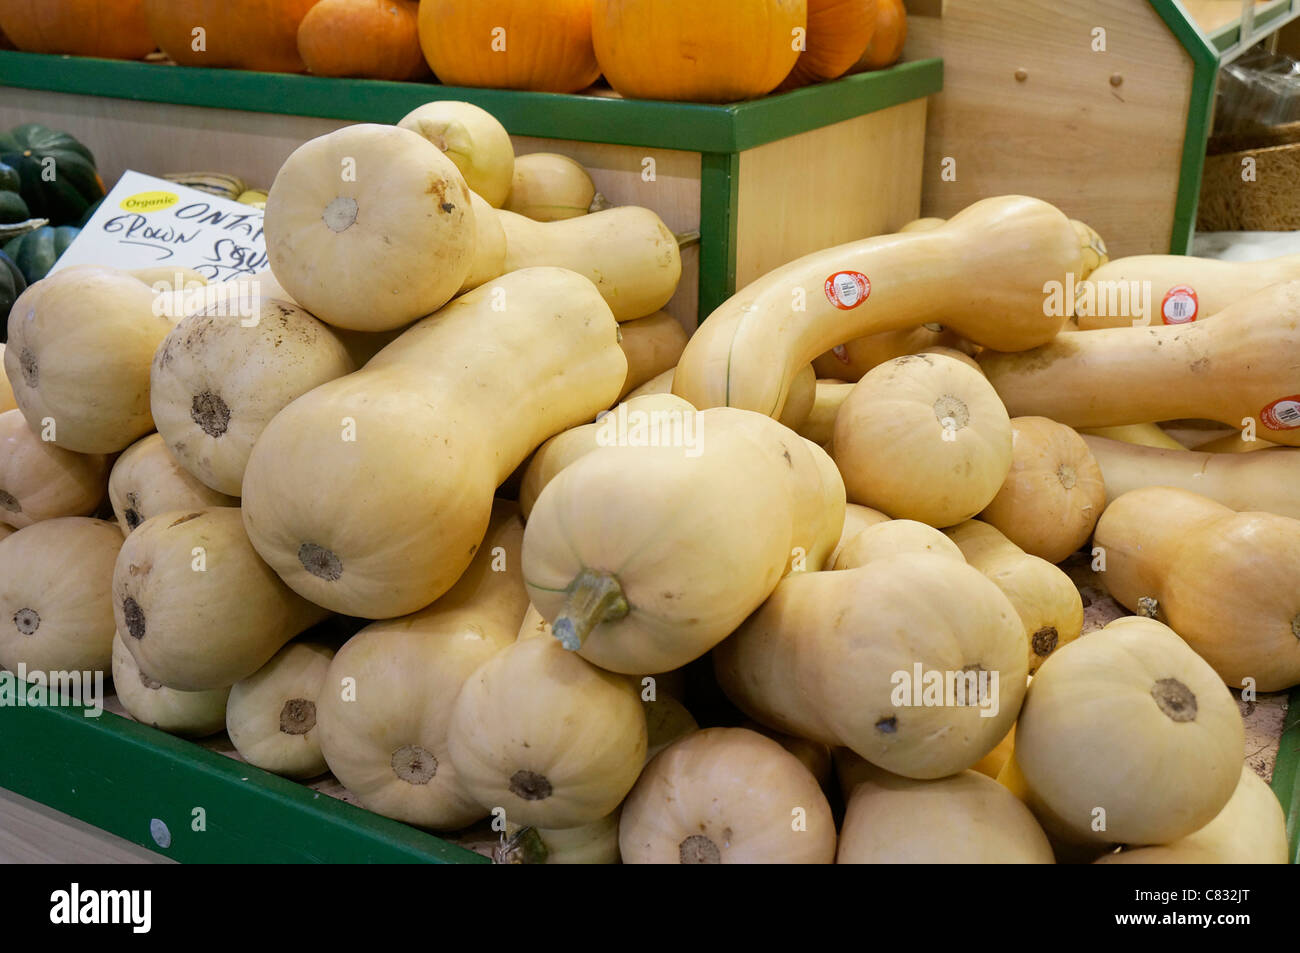 Squash at a market, Vegetable Squashes Stock Photo